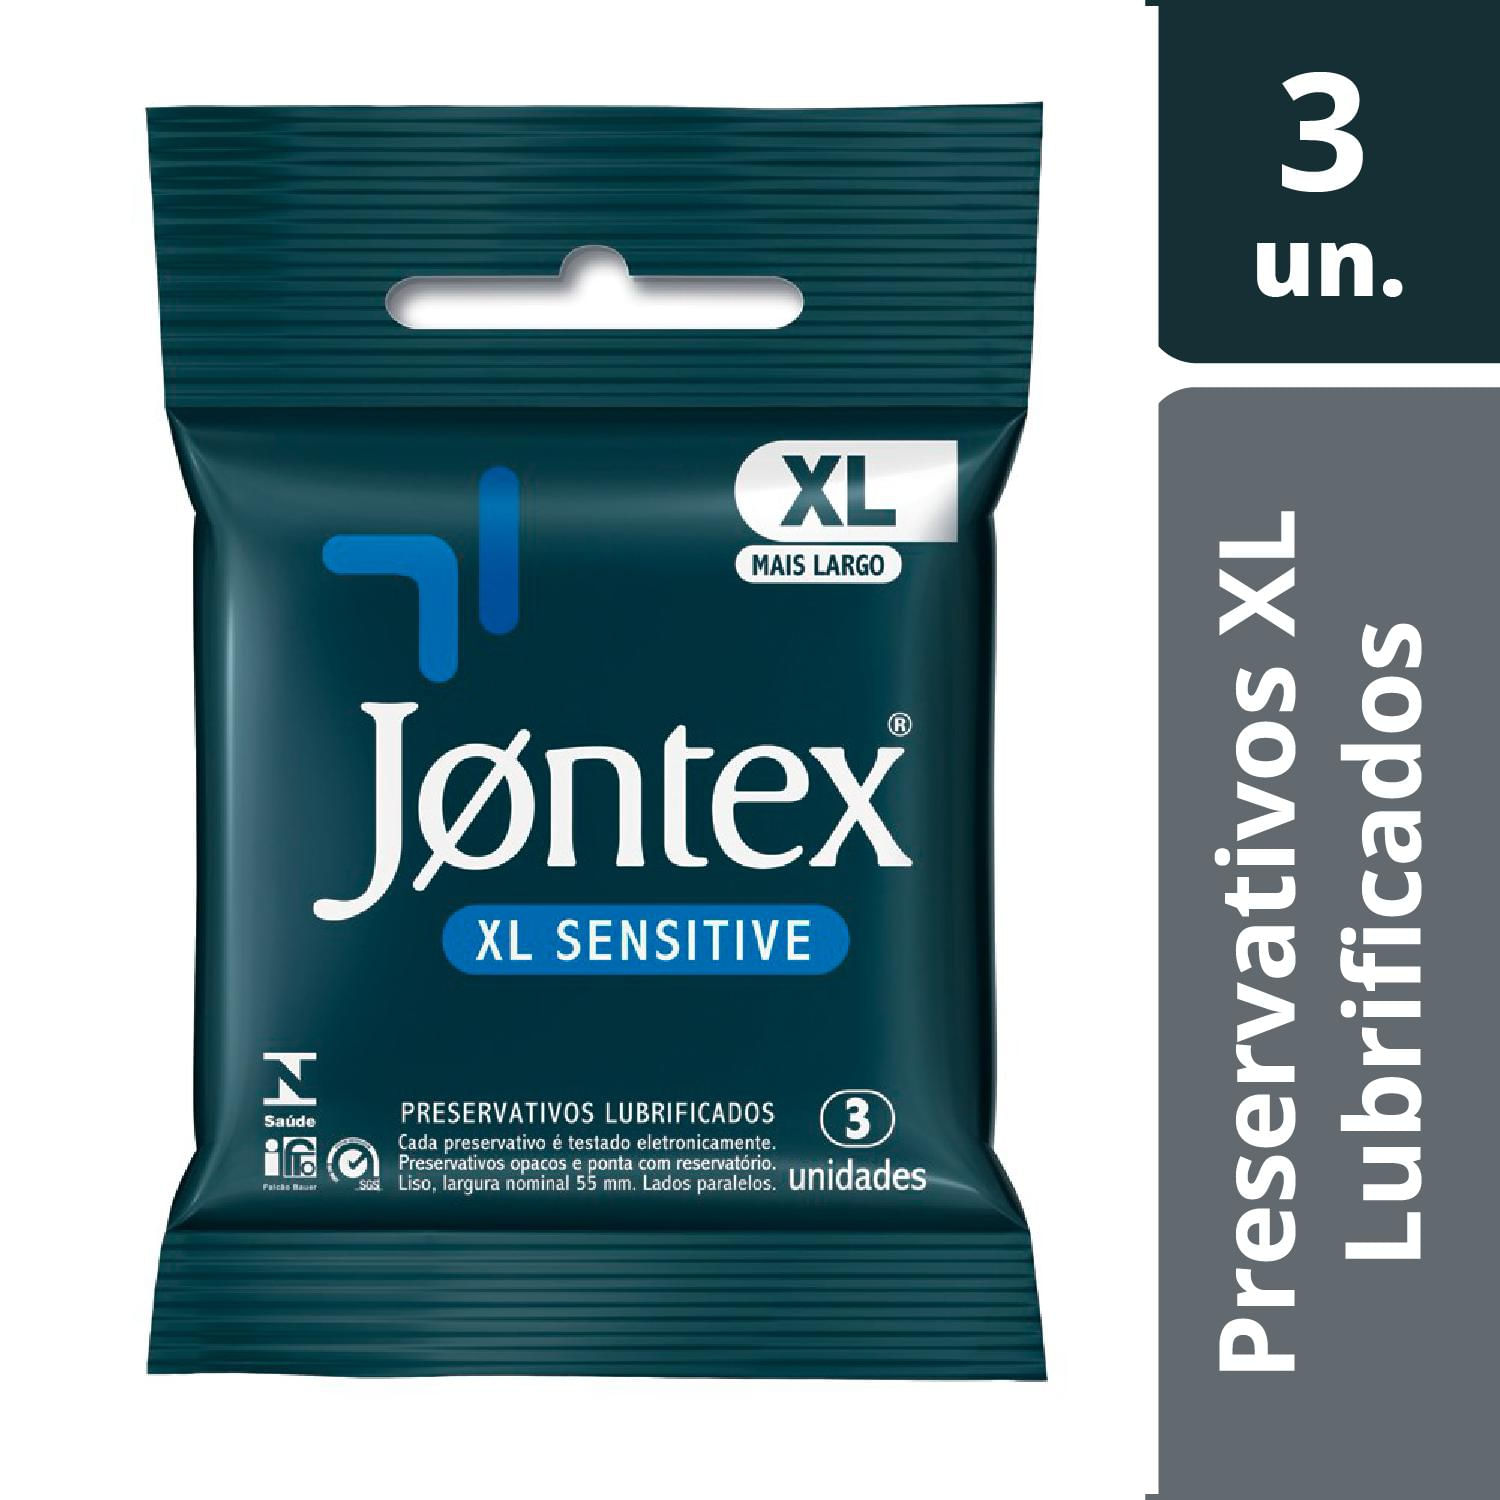 Preservativos Lubrificados XL Sensitive com 3 unidades Jontex